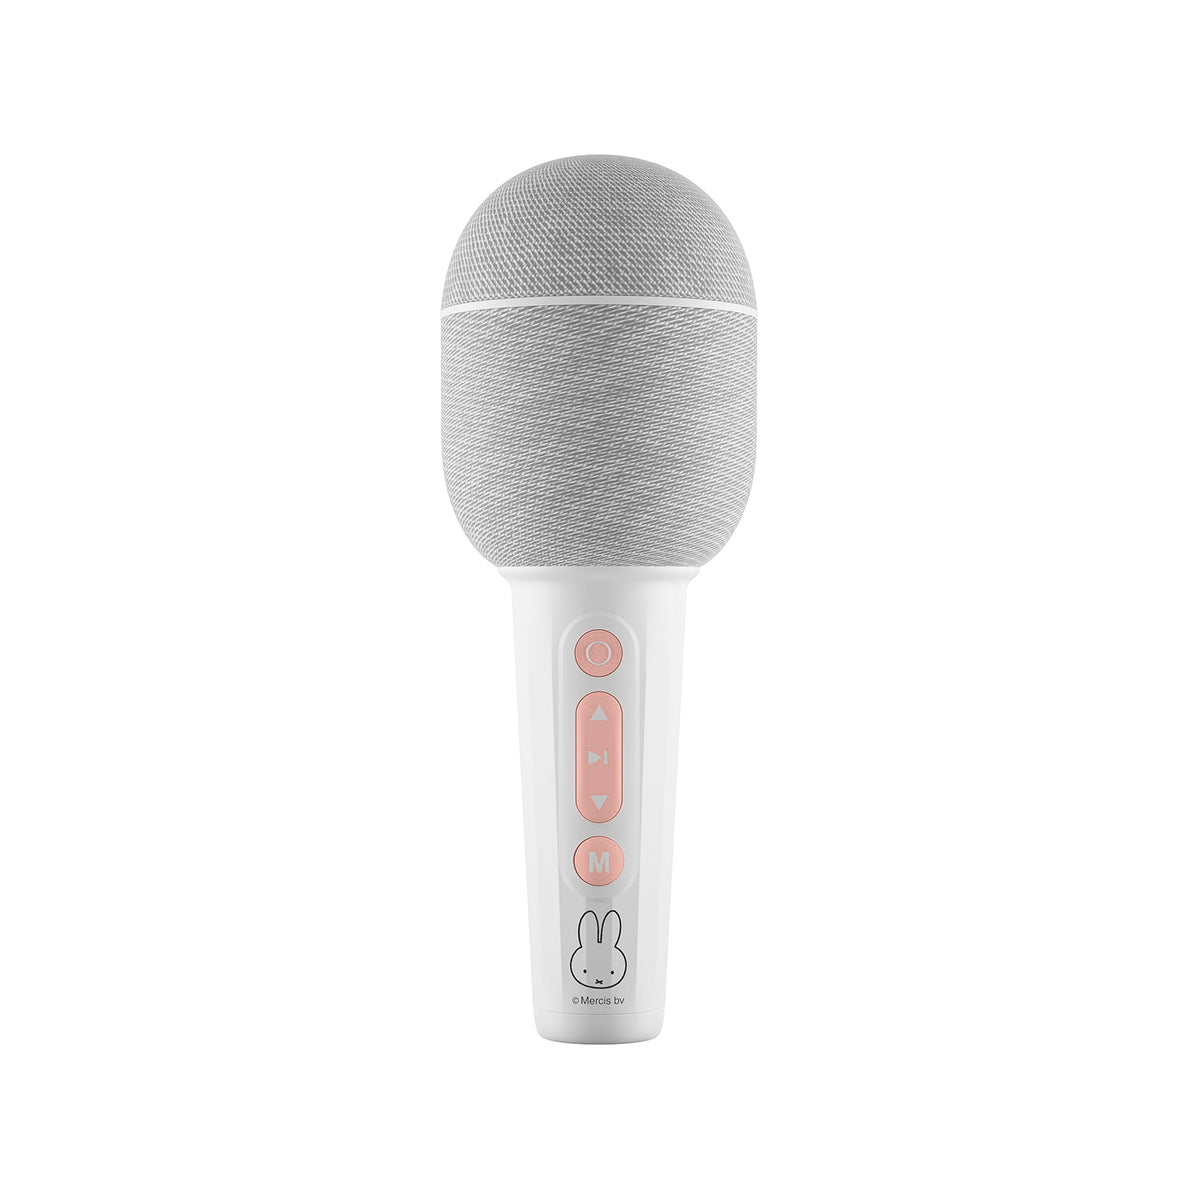 MIPOW x Miffy Karaoke Microphone Bluetooth Speaker with SD/TF card duet  sing karaoke machine Nijntje ミッフィー 米菲